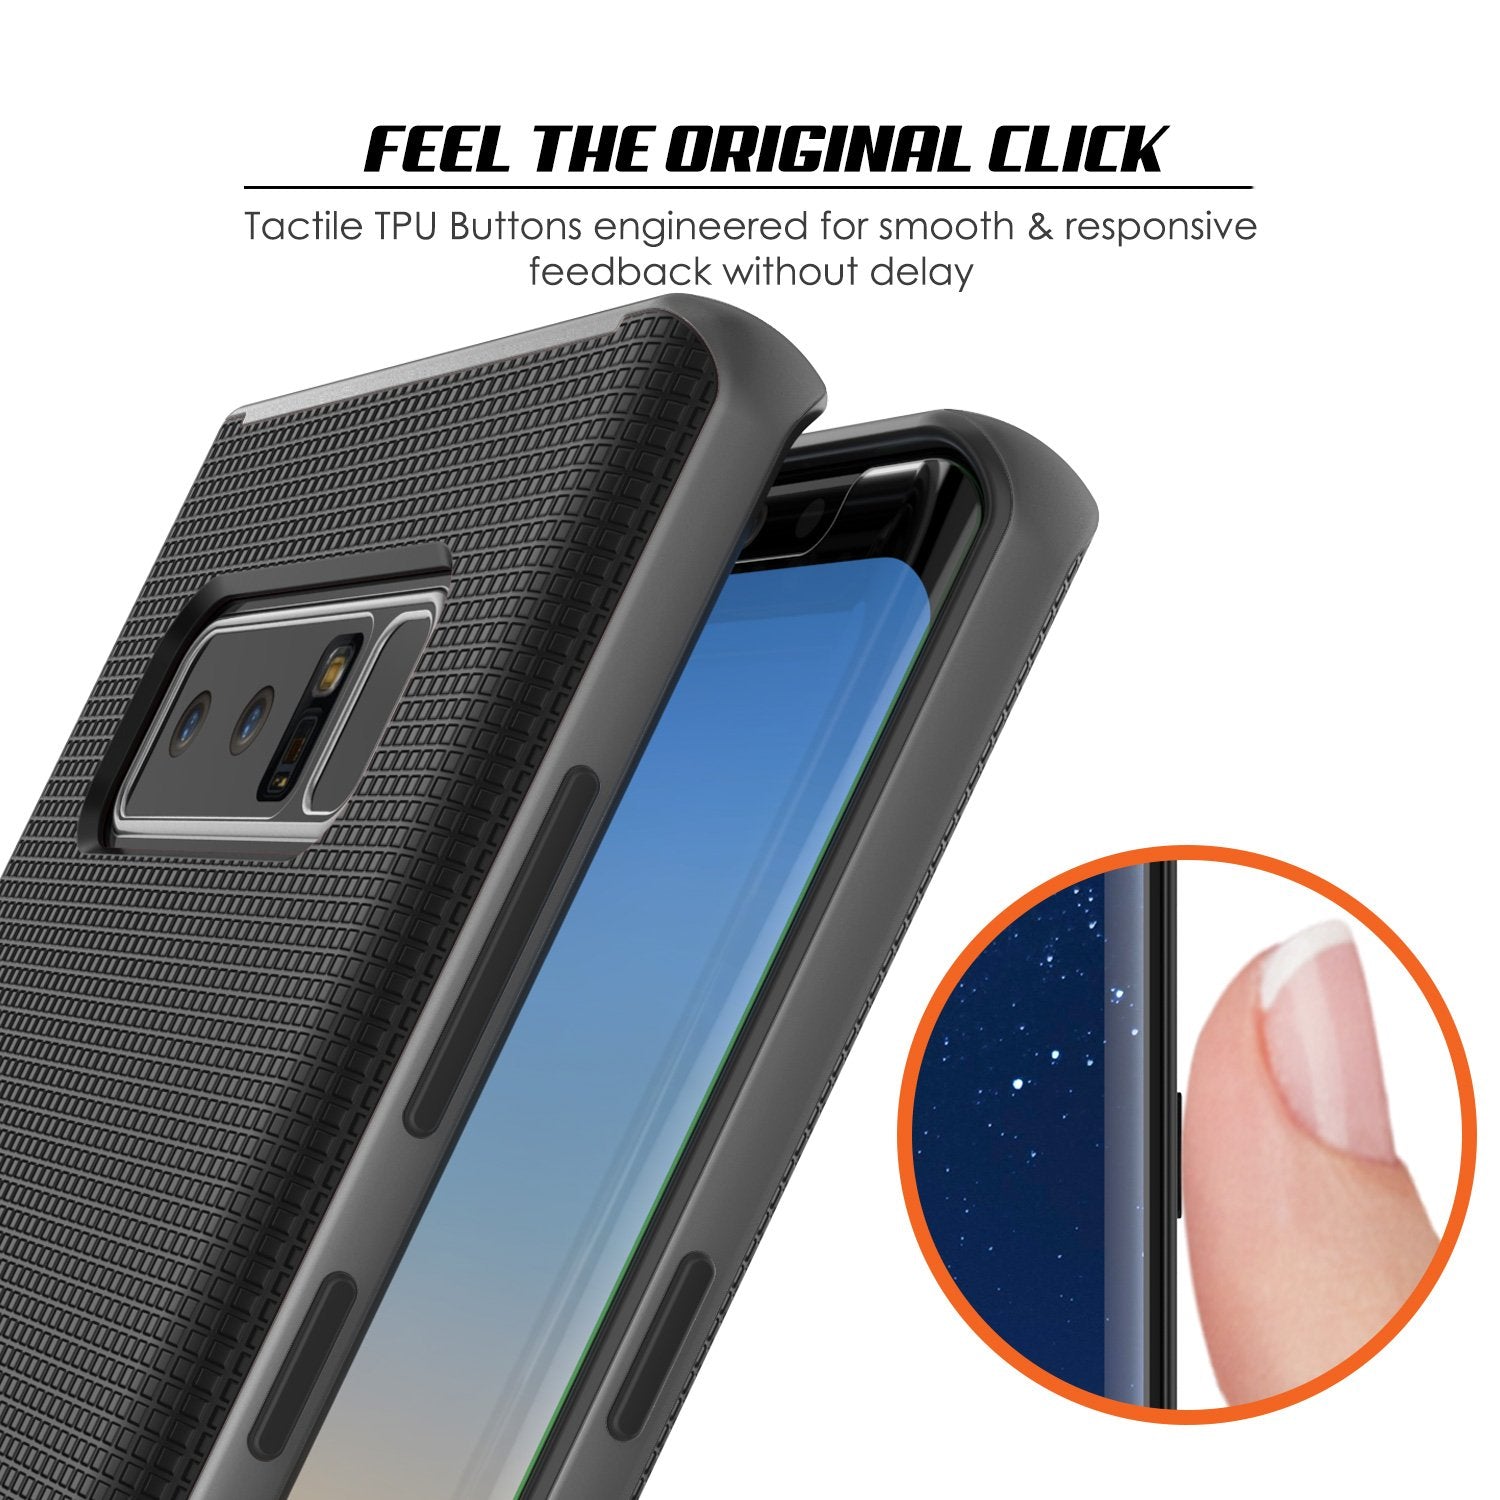 Galaxy Note 8 Case, PunkCase [Stealth Series] Hybrid 3-Piece [Grey]